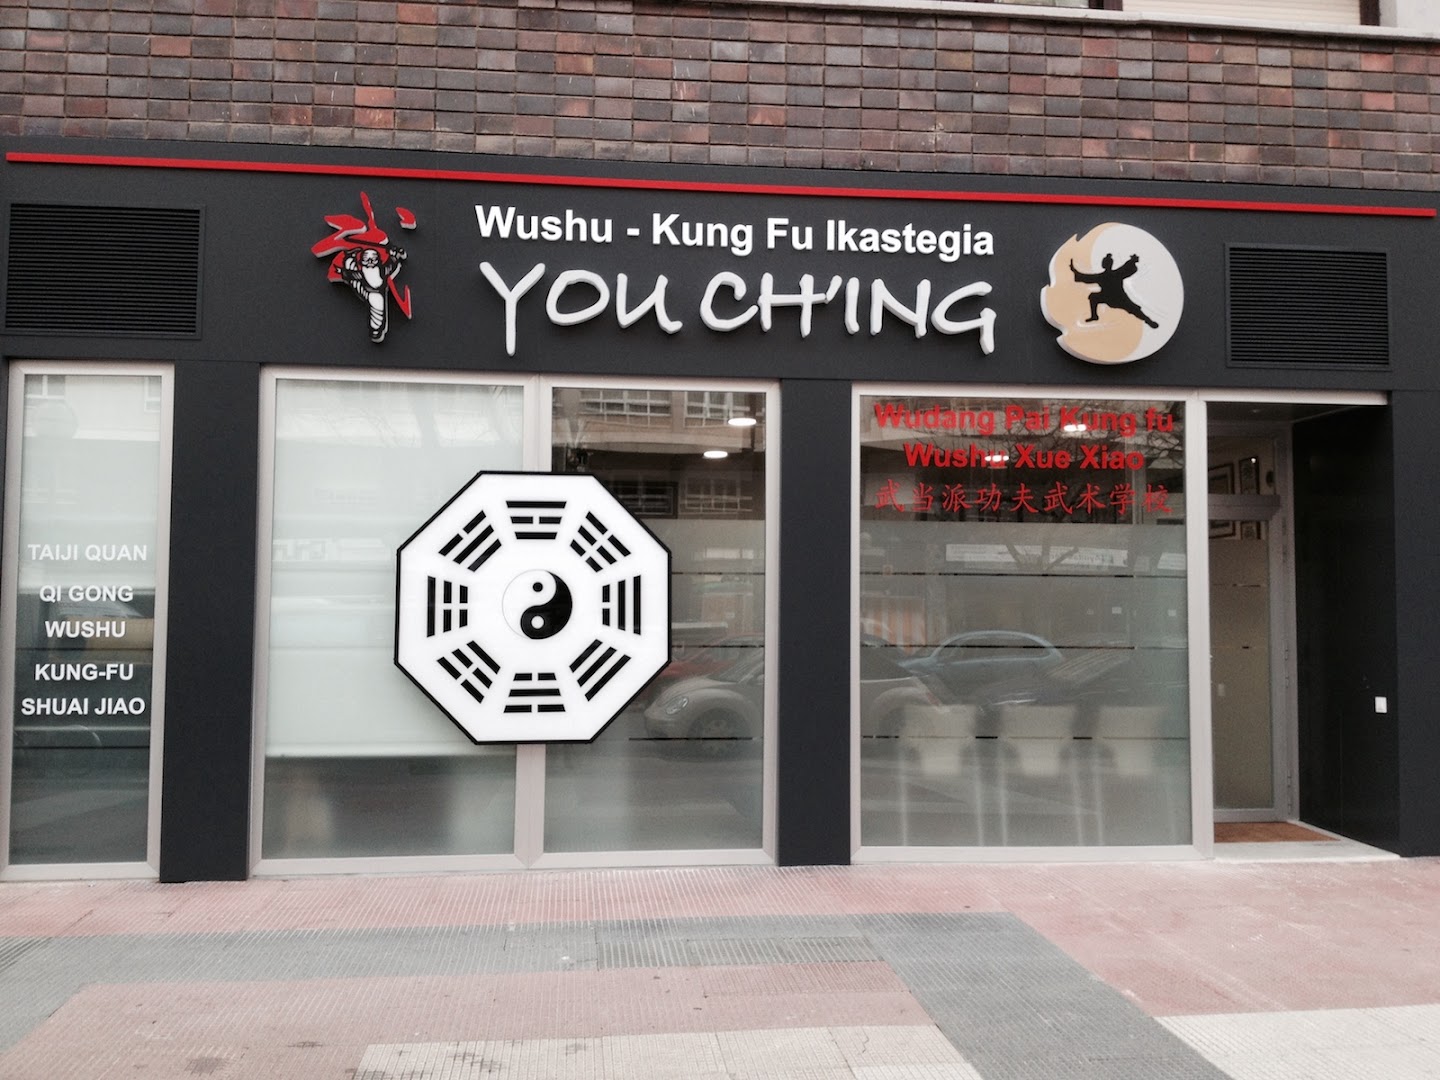 You Ch'ing Wushu - Kung Fu Ikastegia